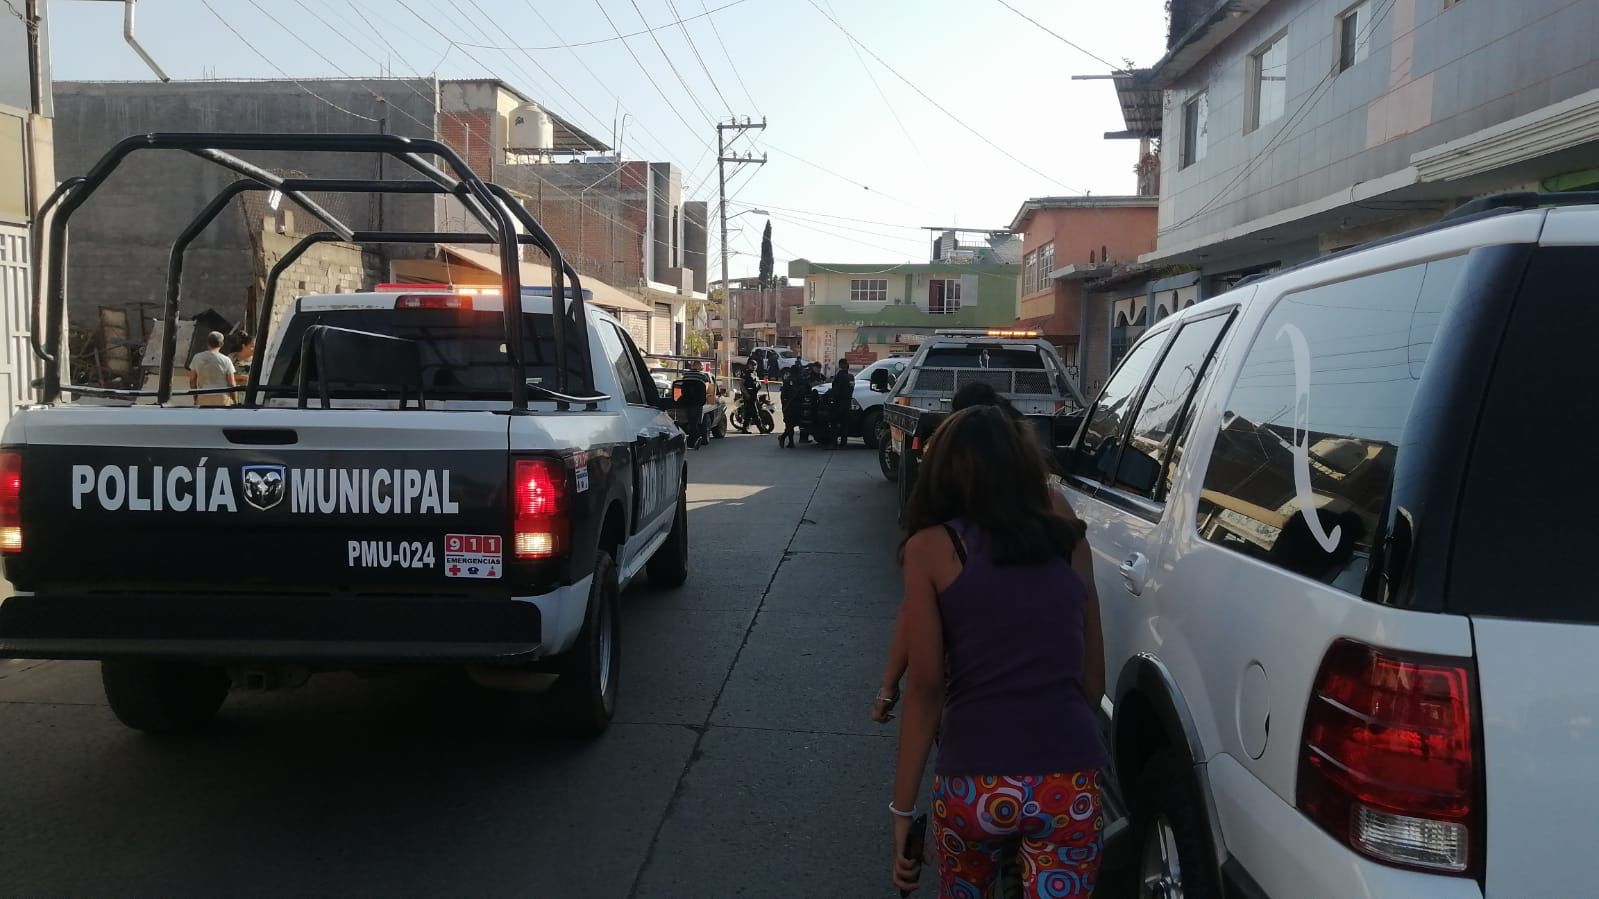 De 11 balazos matan a un hombre en la colonia Ejidal Lázaro Cárdenas